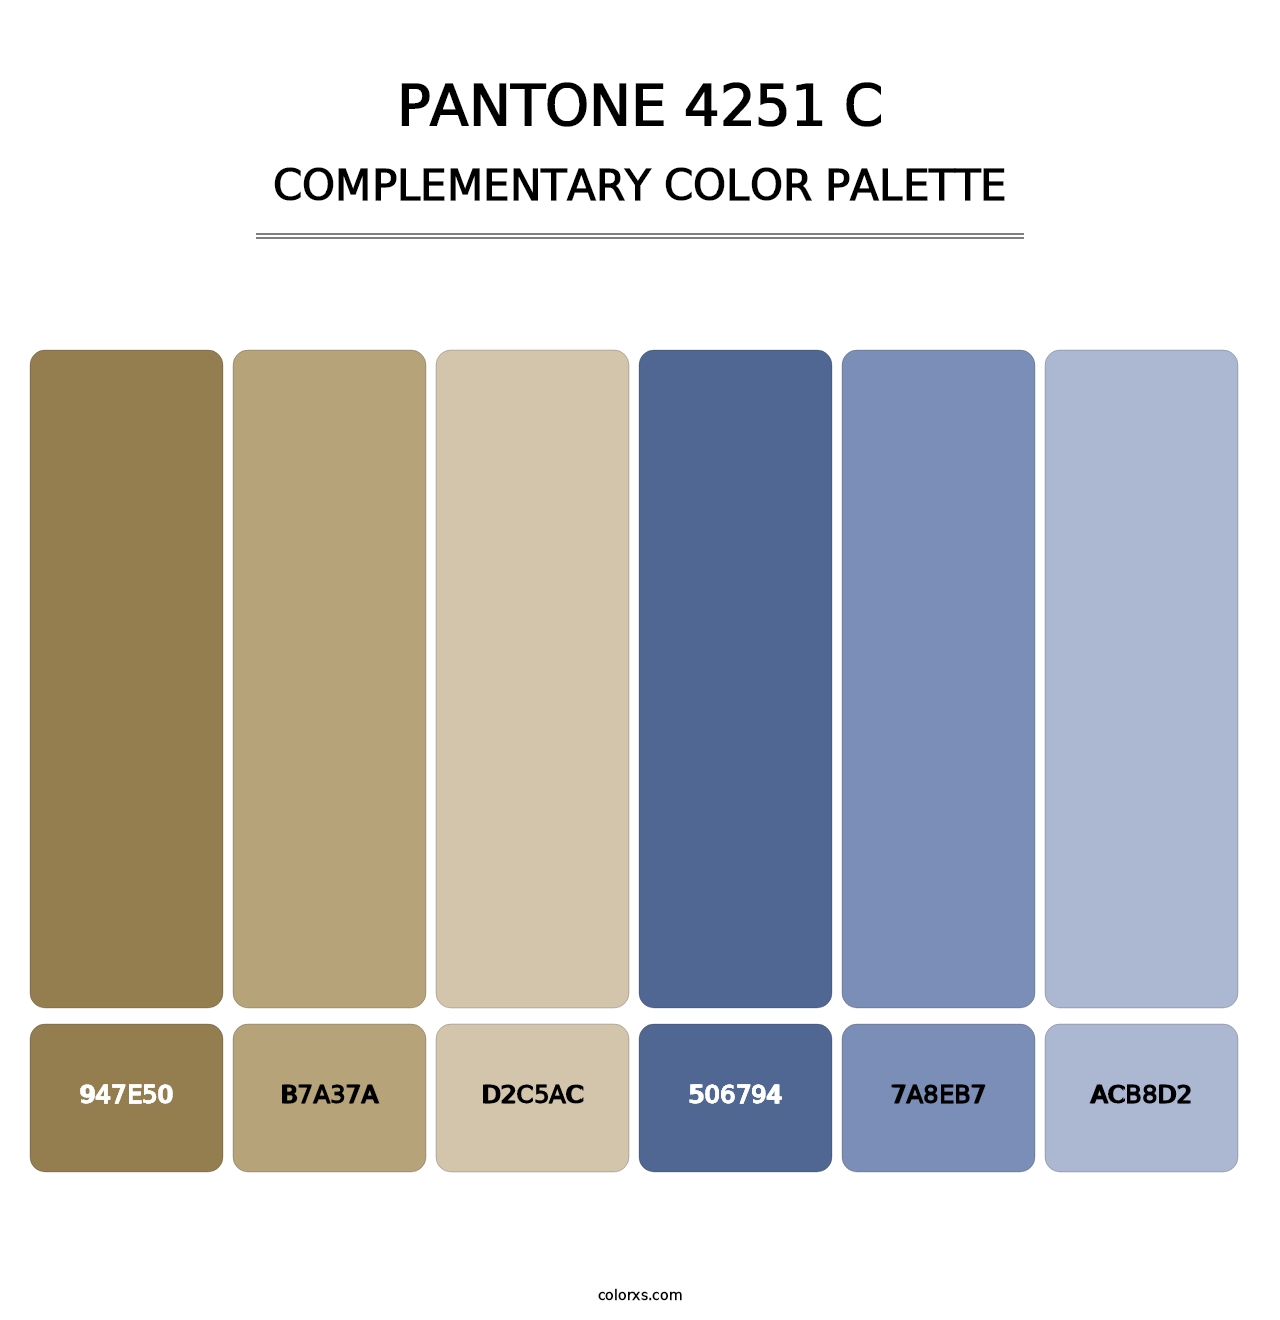 PANTONE 4251 C - Complementary Color Palette